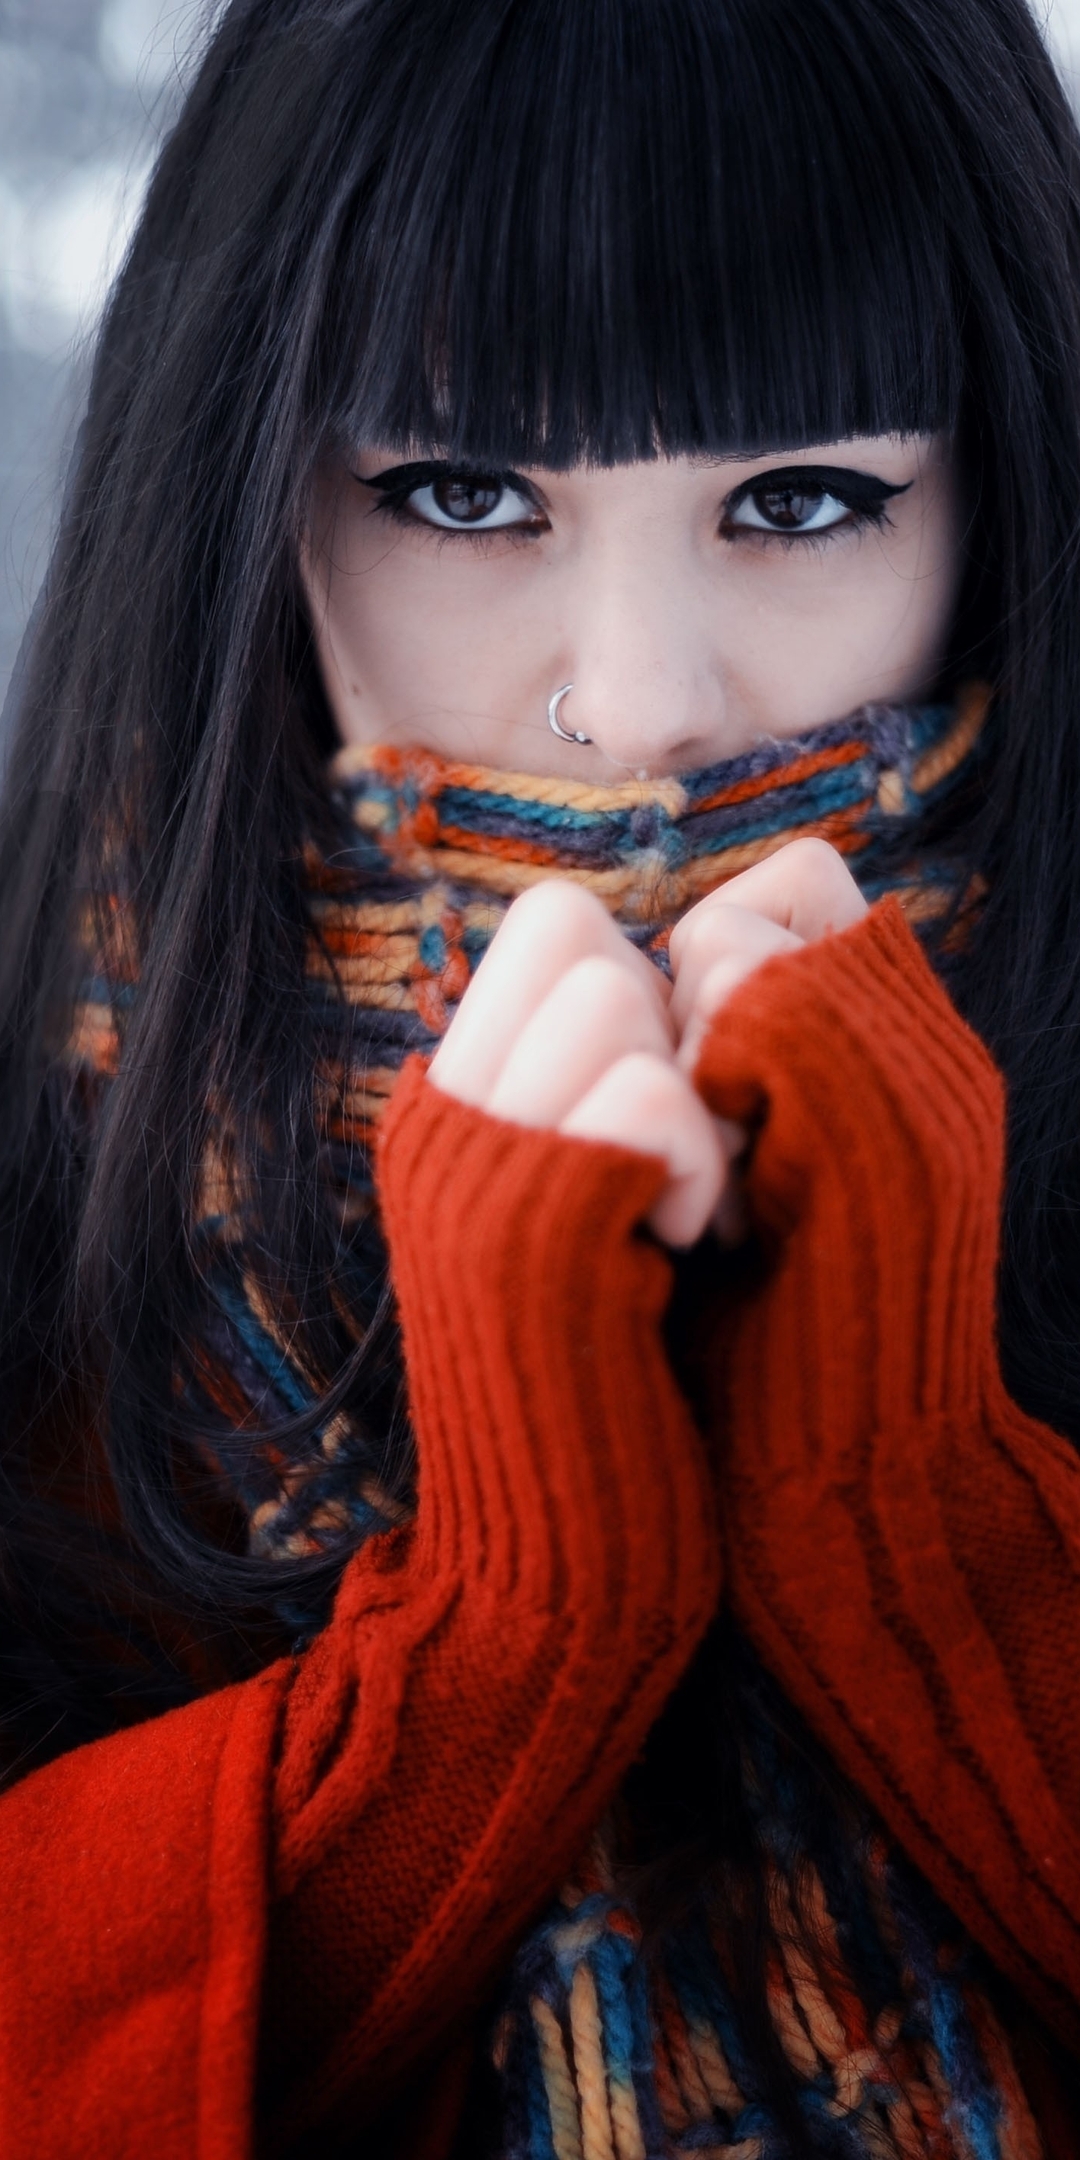 Картинка: Брюнетка, взгляд, тепло, греется, кофта, шарф, волосы, пирсинг, зима